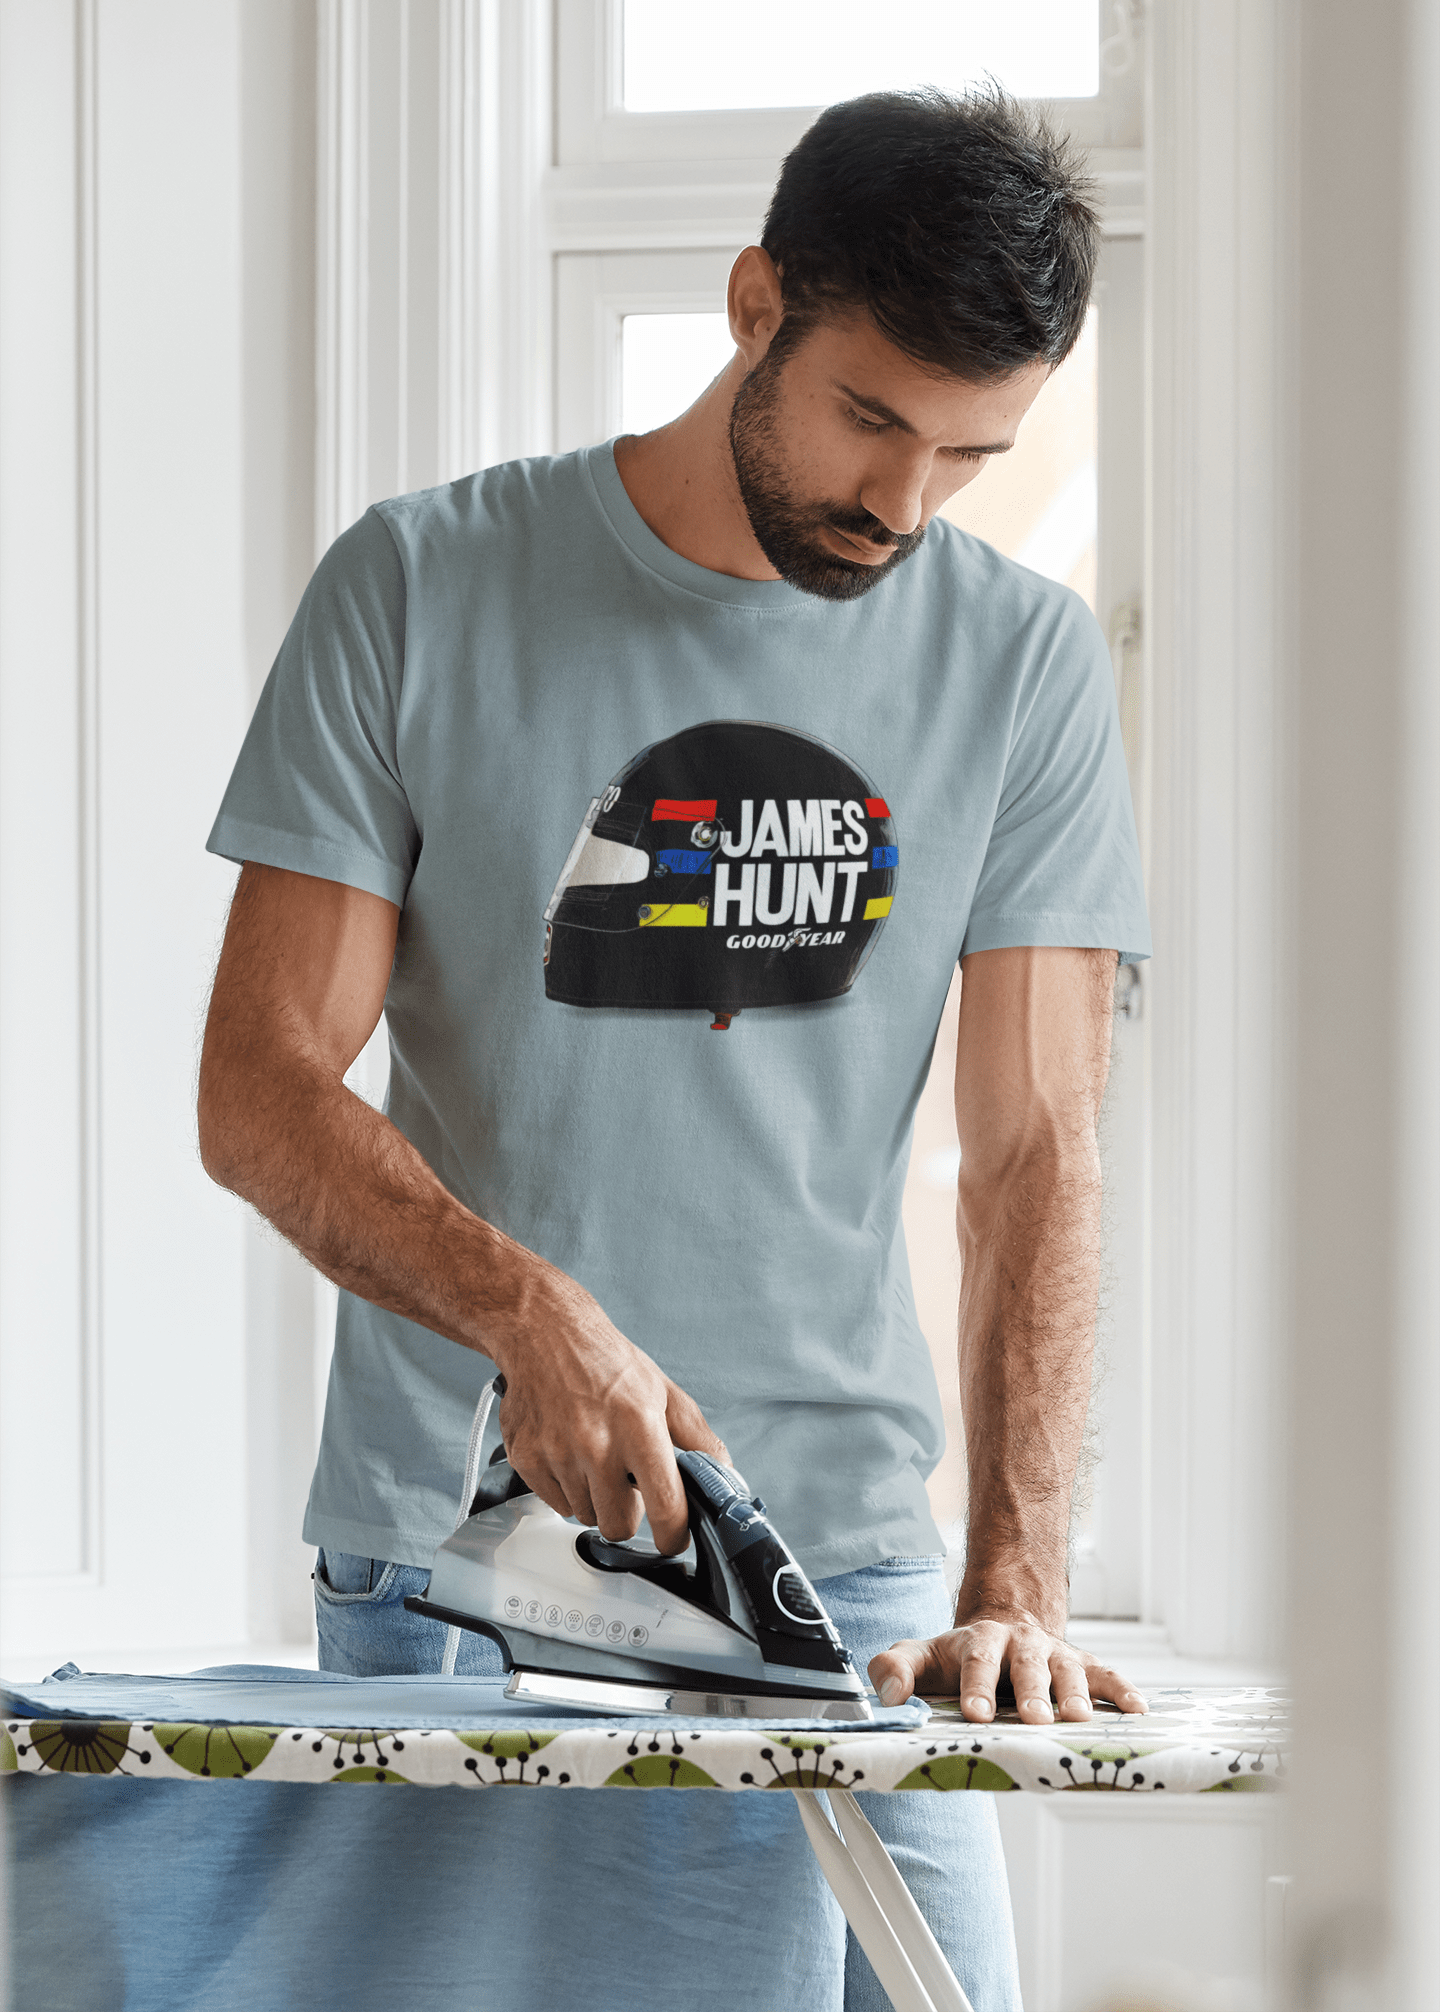 James Hunt Formula 1 Helmet Shirt T-Shirt 1976 Not Enough Merch